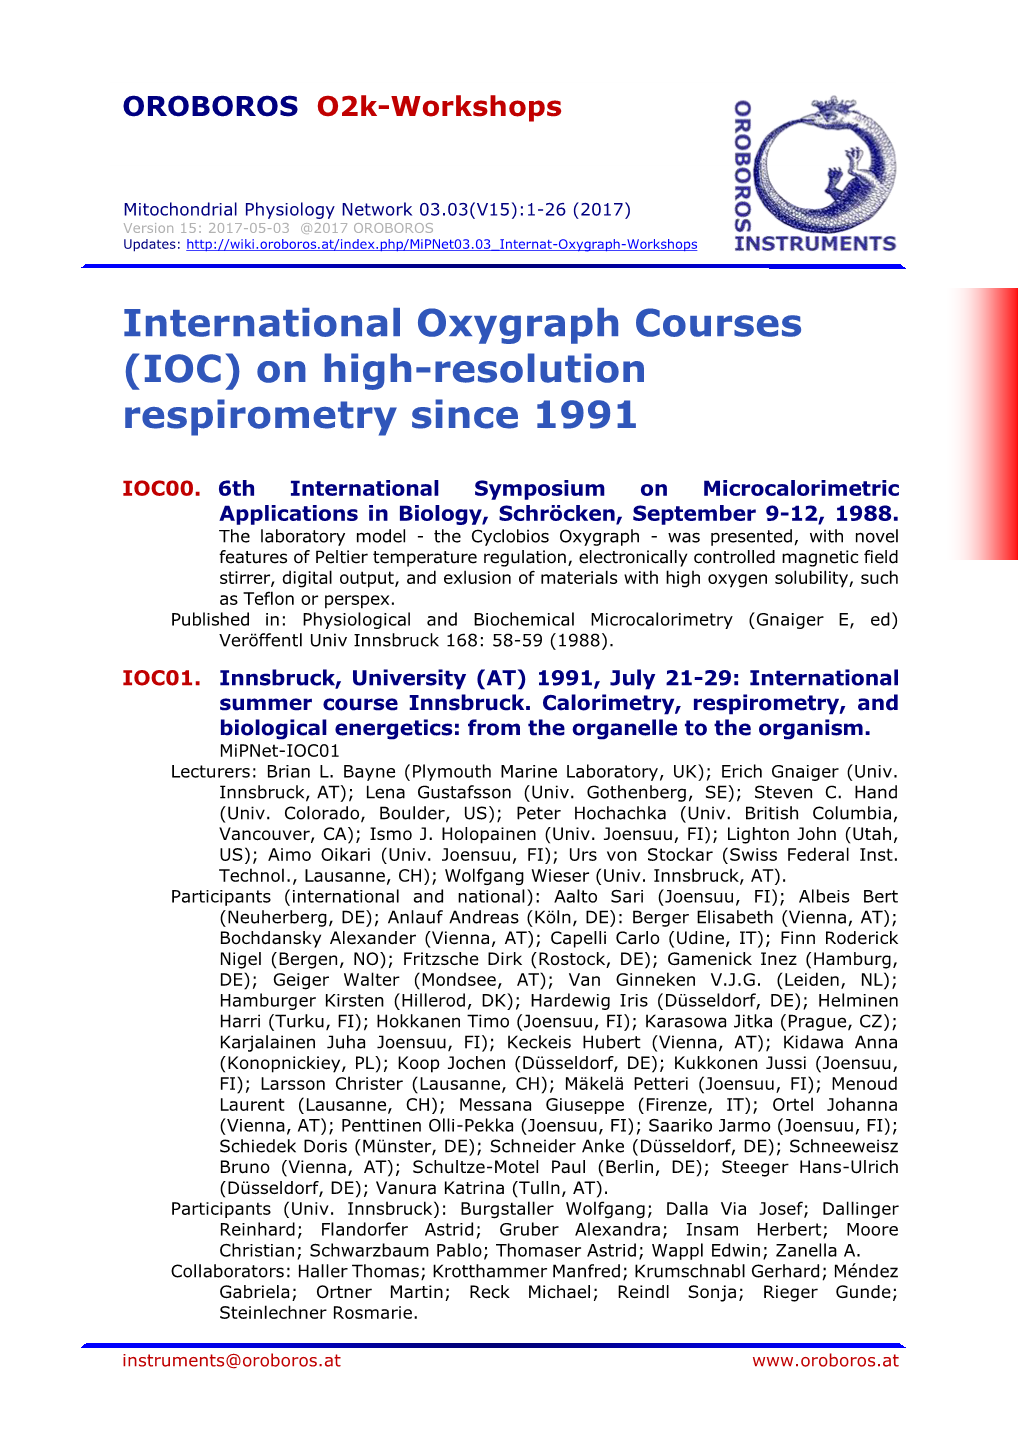 International Oxygraph Courses (IOC) on High-Resolution Respirometry Since 1991